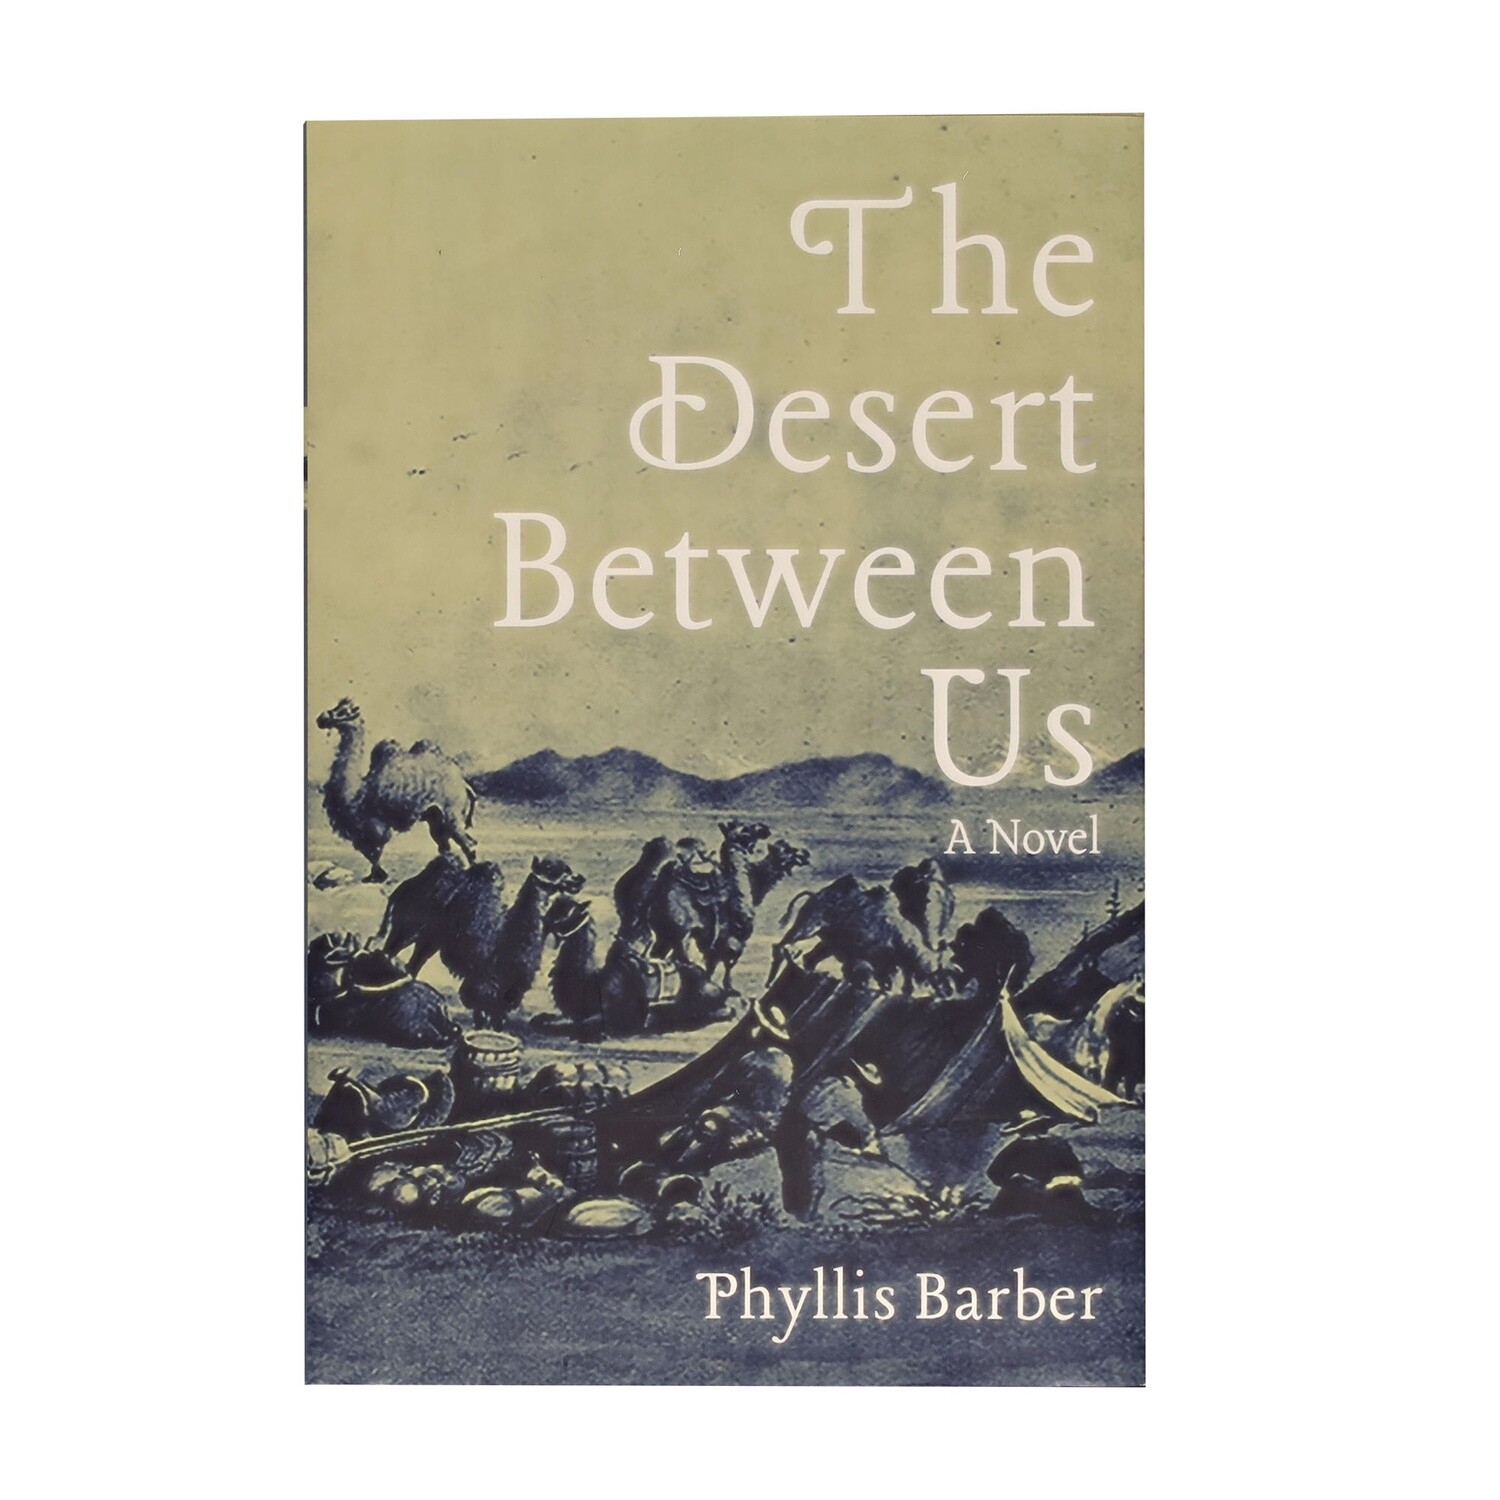 The Desert Between Us - A Novel by Phyllis Barber